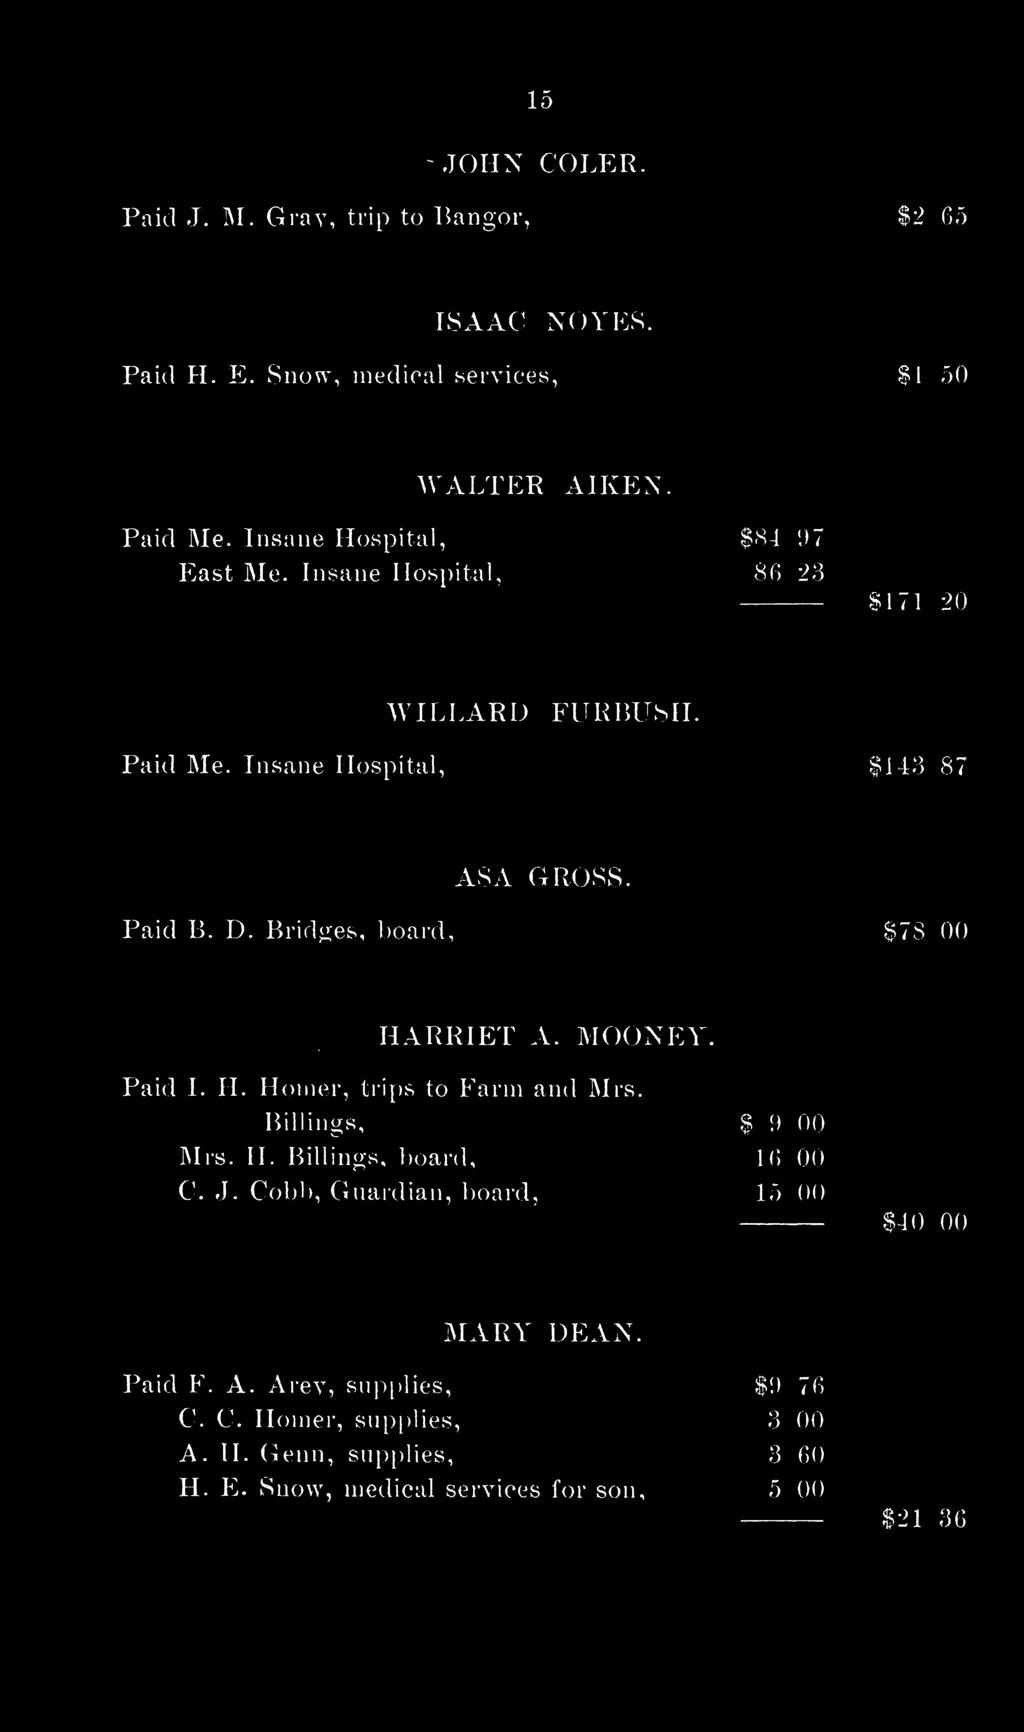 Bridges, board, $73 00 «HARRIET A. MOONEY. Paid 1. H. Horner, trips to Farm and Mrs. Billings, $ 9 00 Mrs. H. Billings, board, 16 00 C. J.